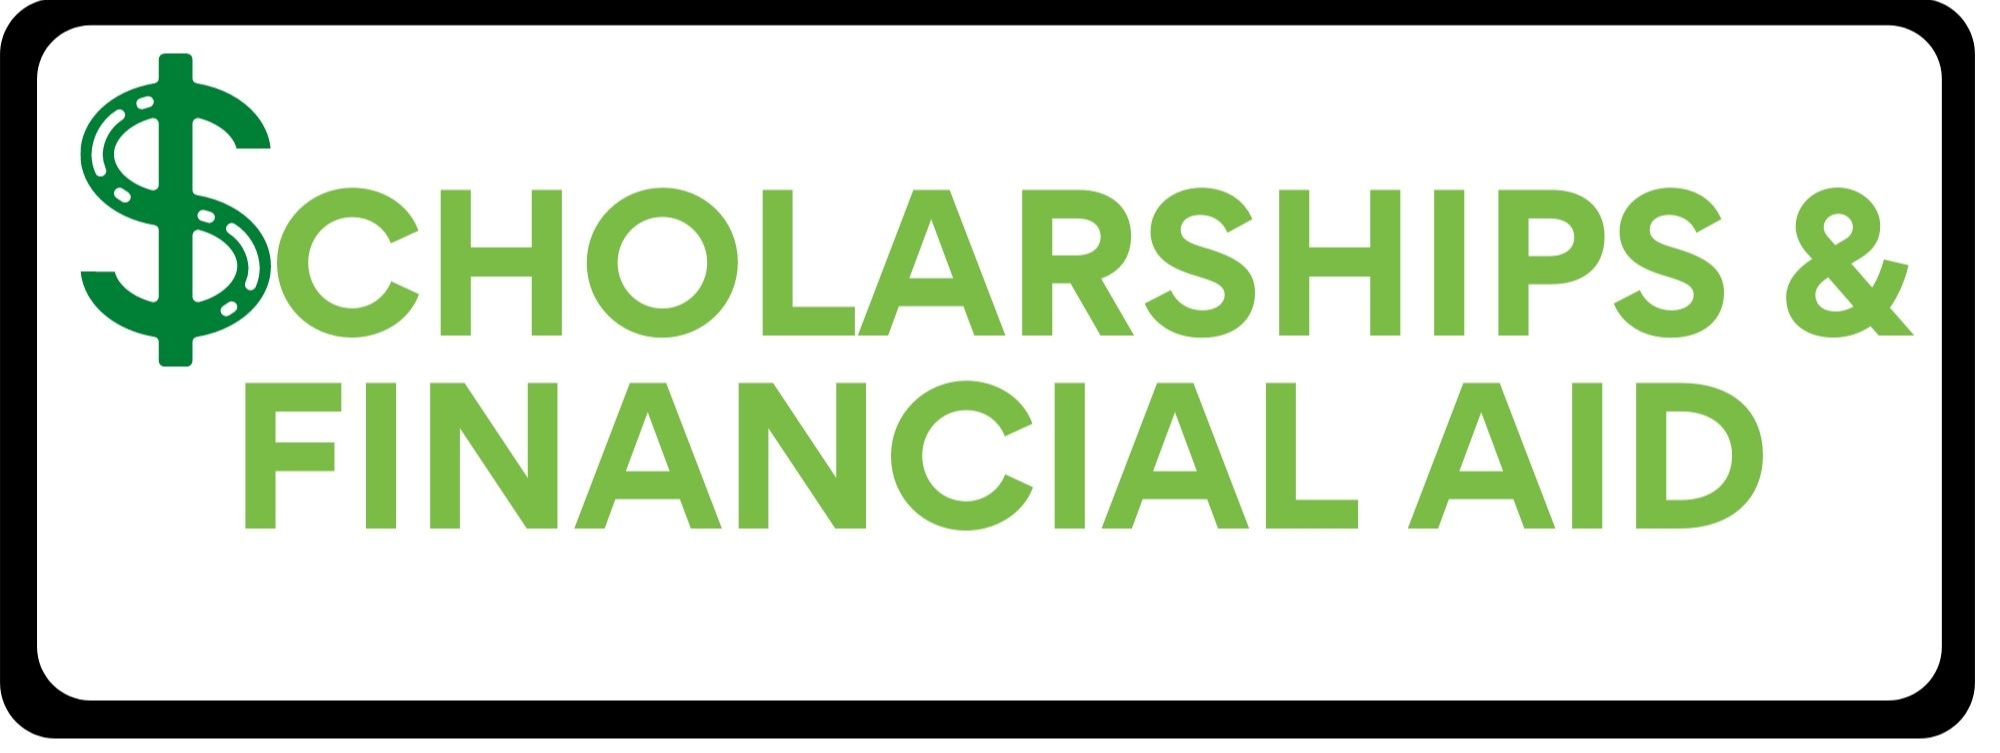 Scholarship Financial